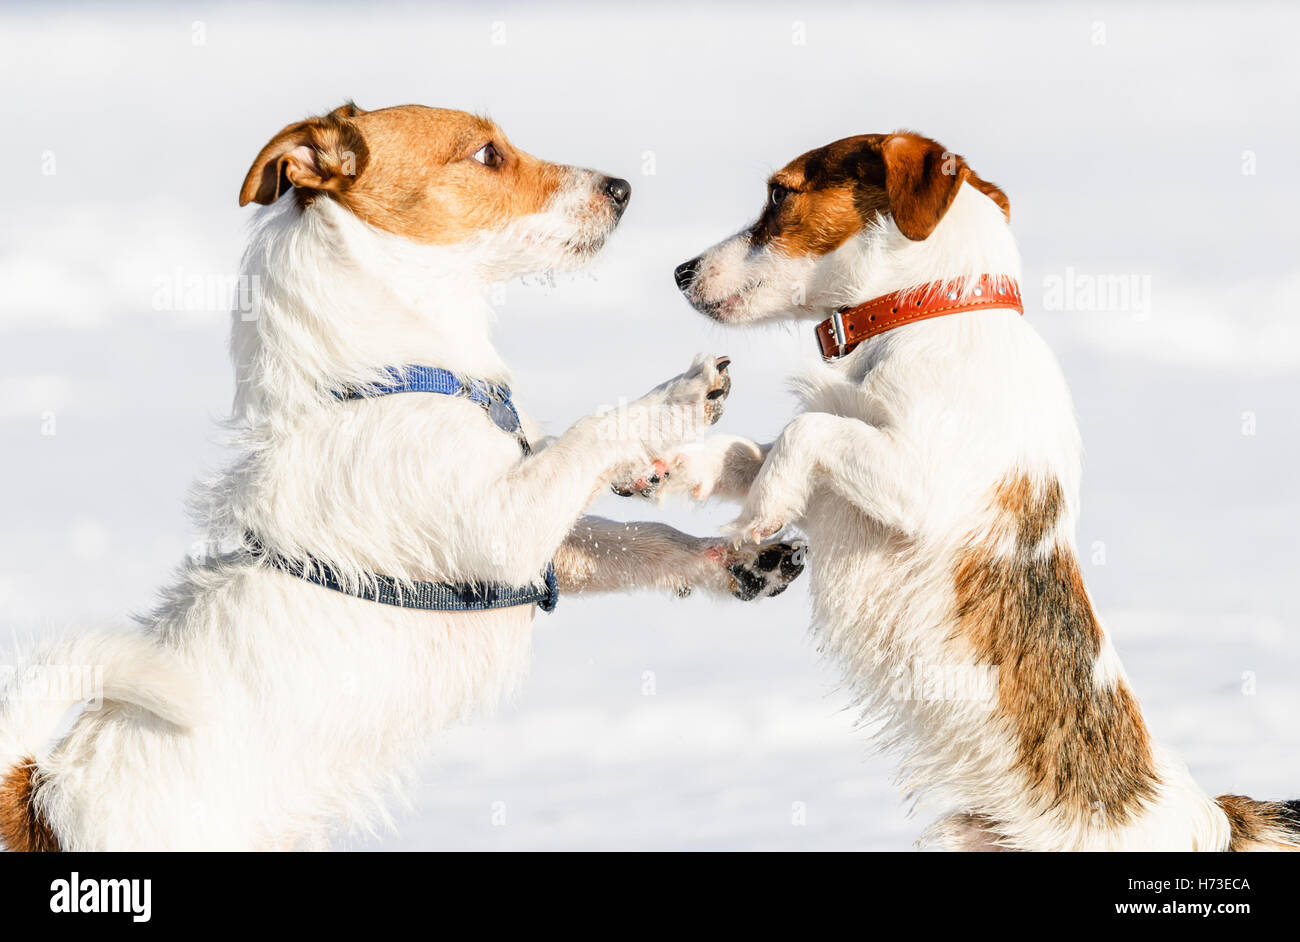 Dog in harness vs dog in collar wrestling on snow Stock Photo